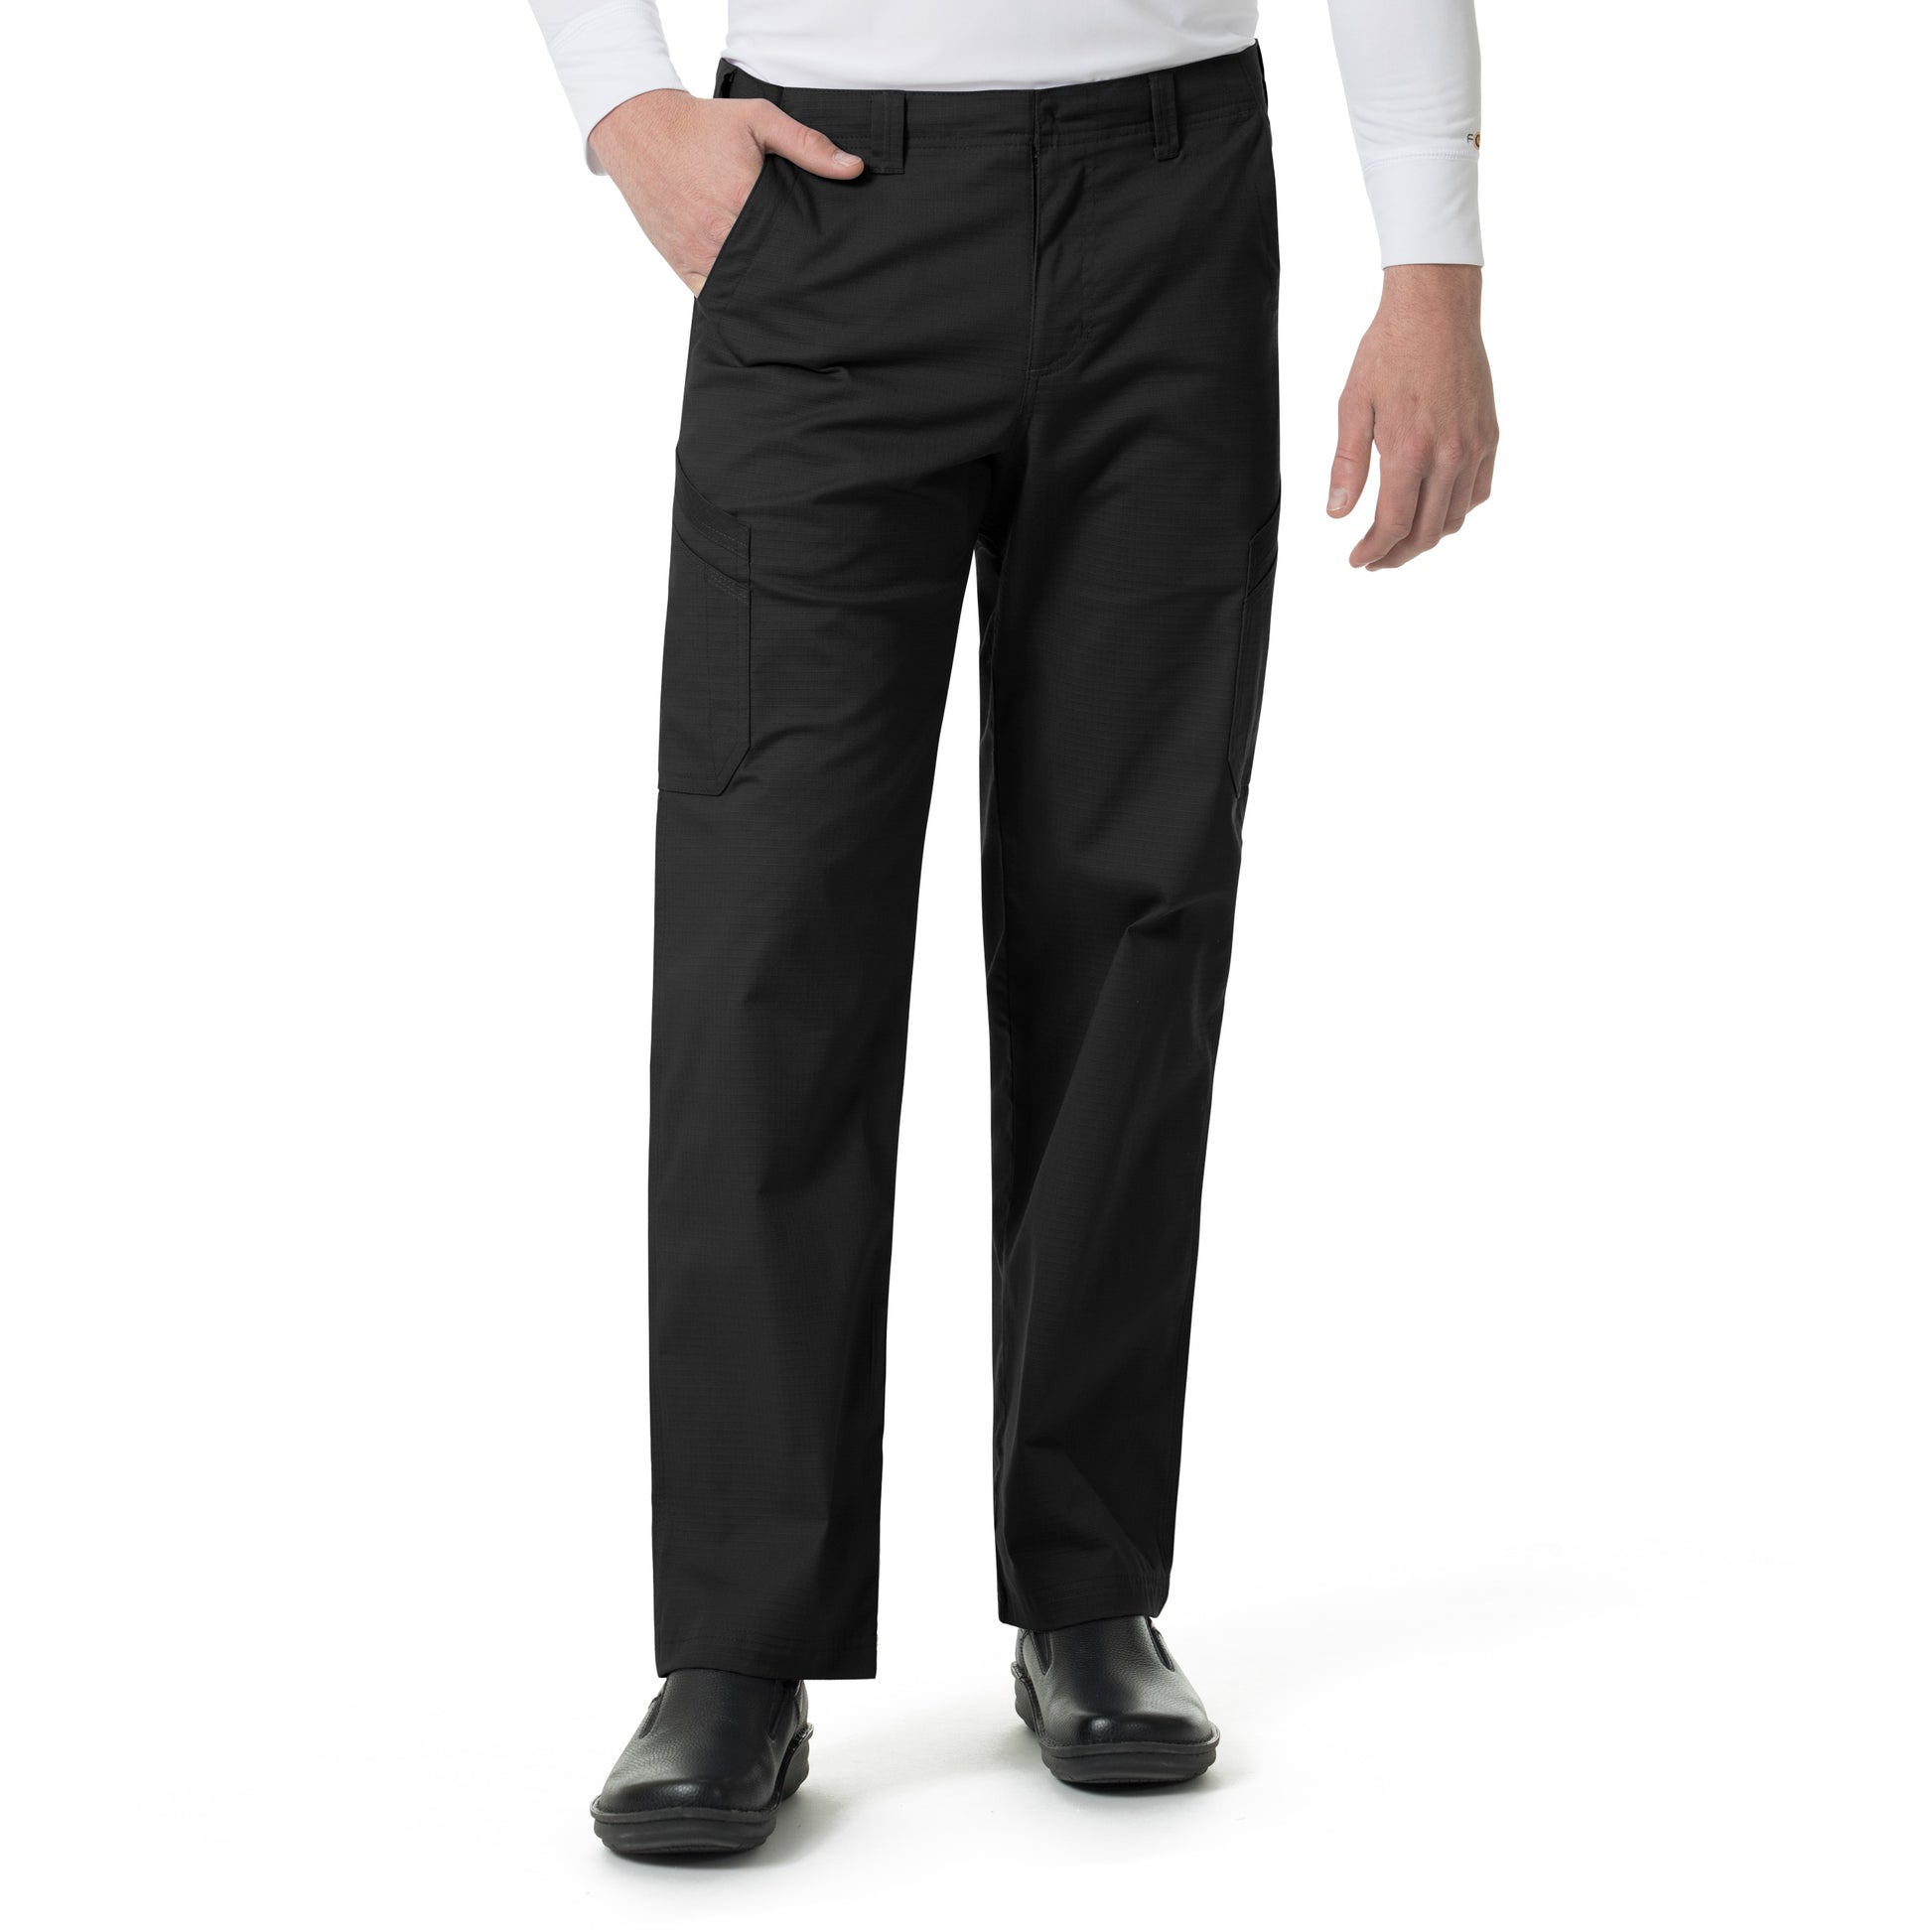 Carhartt Men's Straight Fit Multi Cargo Pants, Black